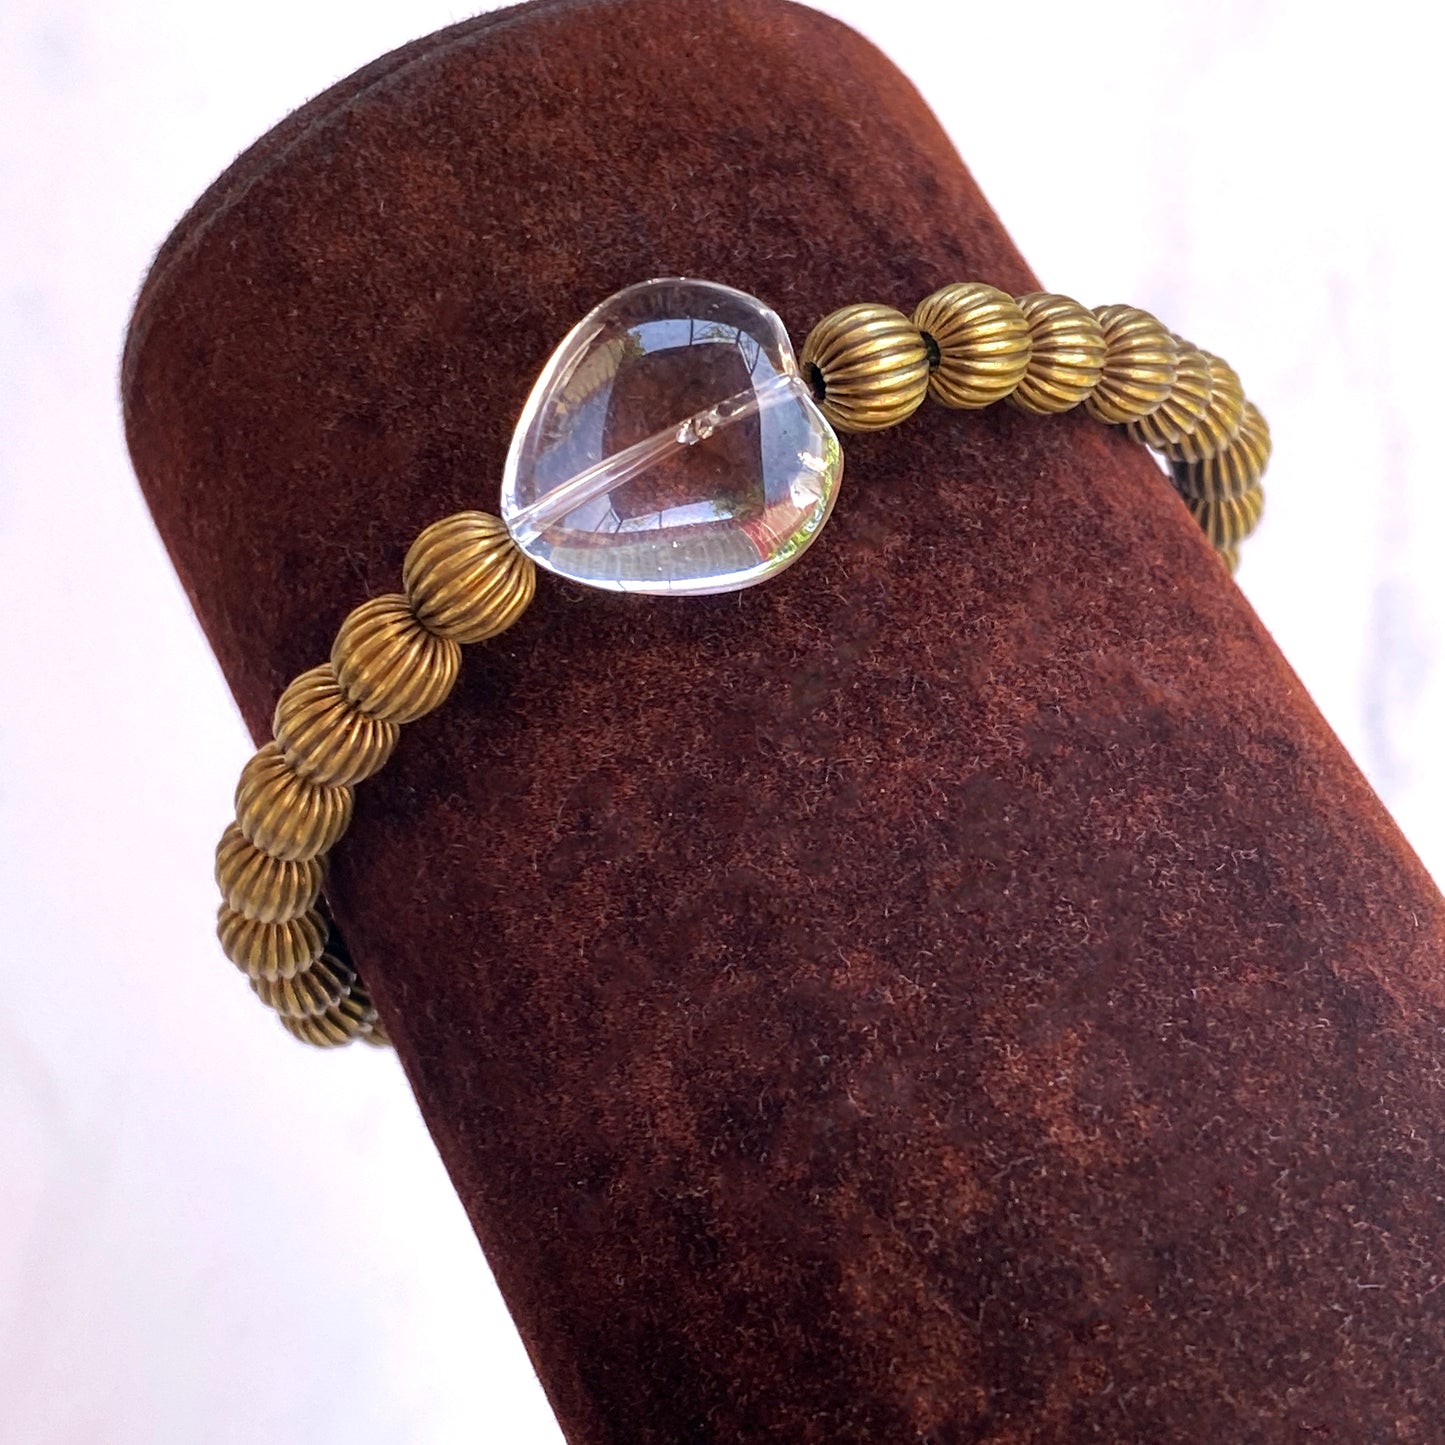 Brass and Clear Quartz gemstone Heart Stretch Bracelet